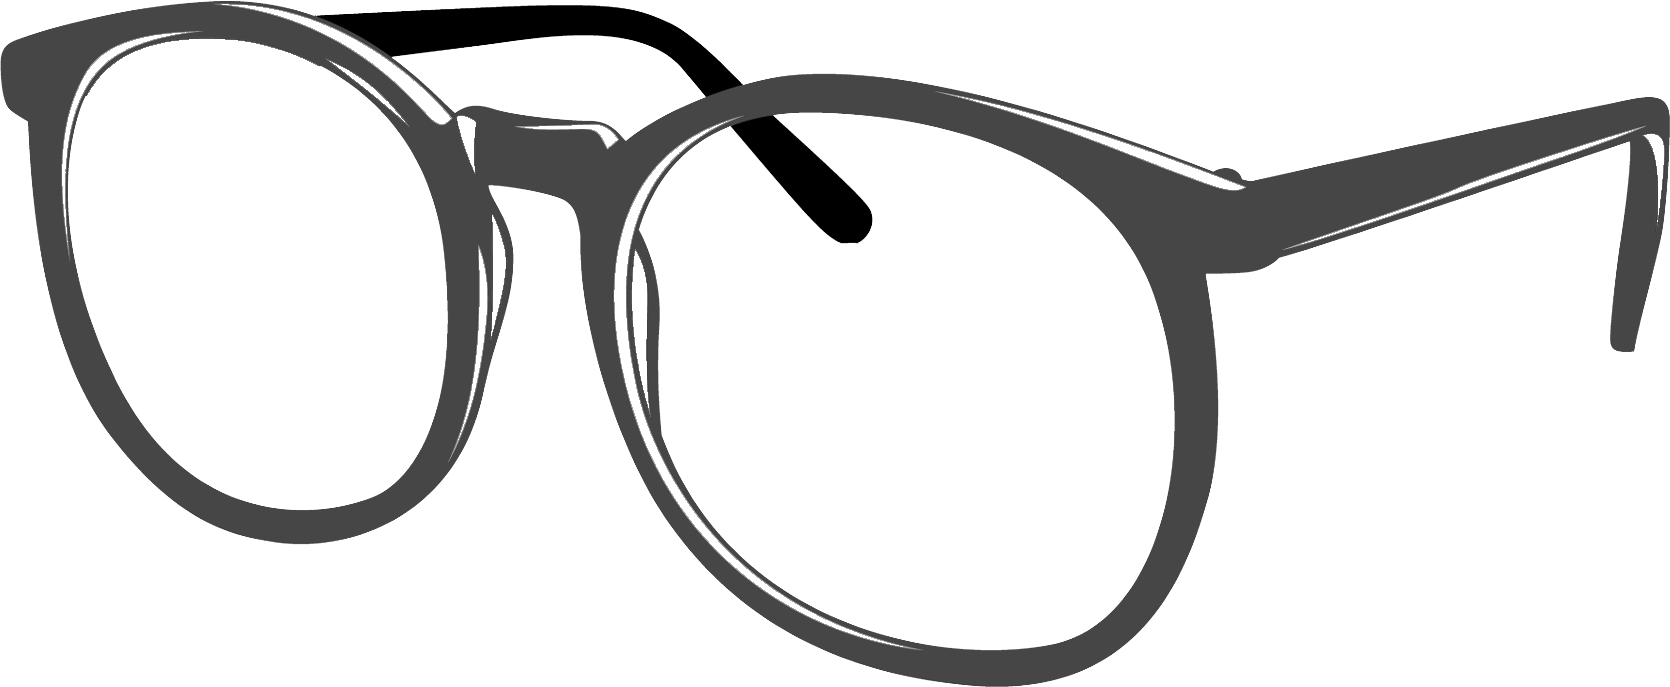 Sunglasses Clipart Transparent Gif - Clip Art Glasses Transparent (1670x687), Png Download